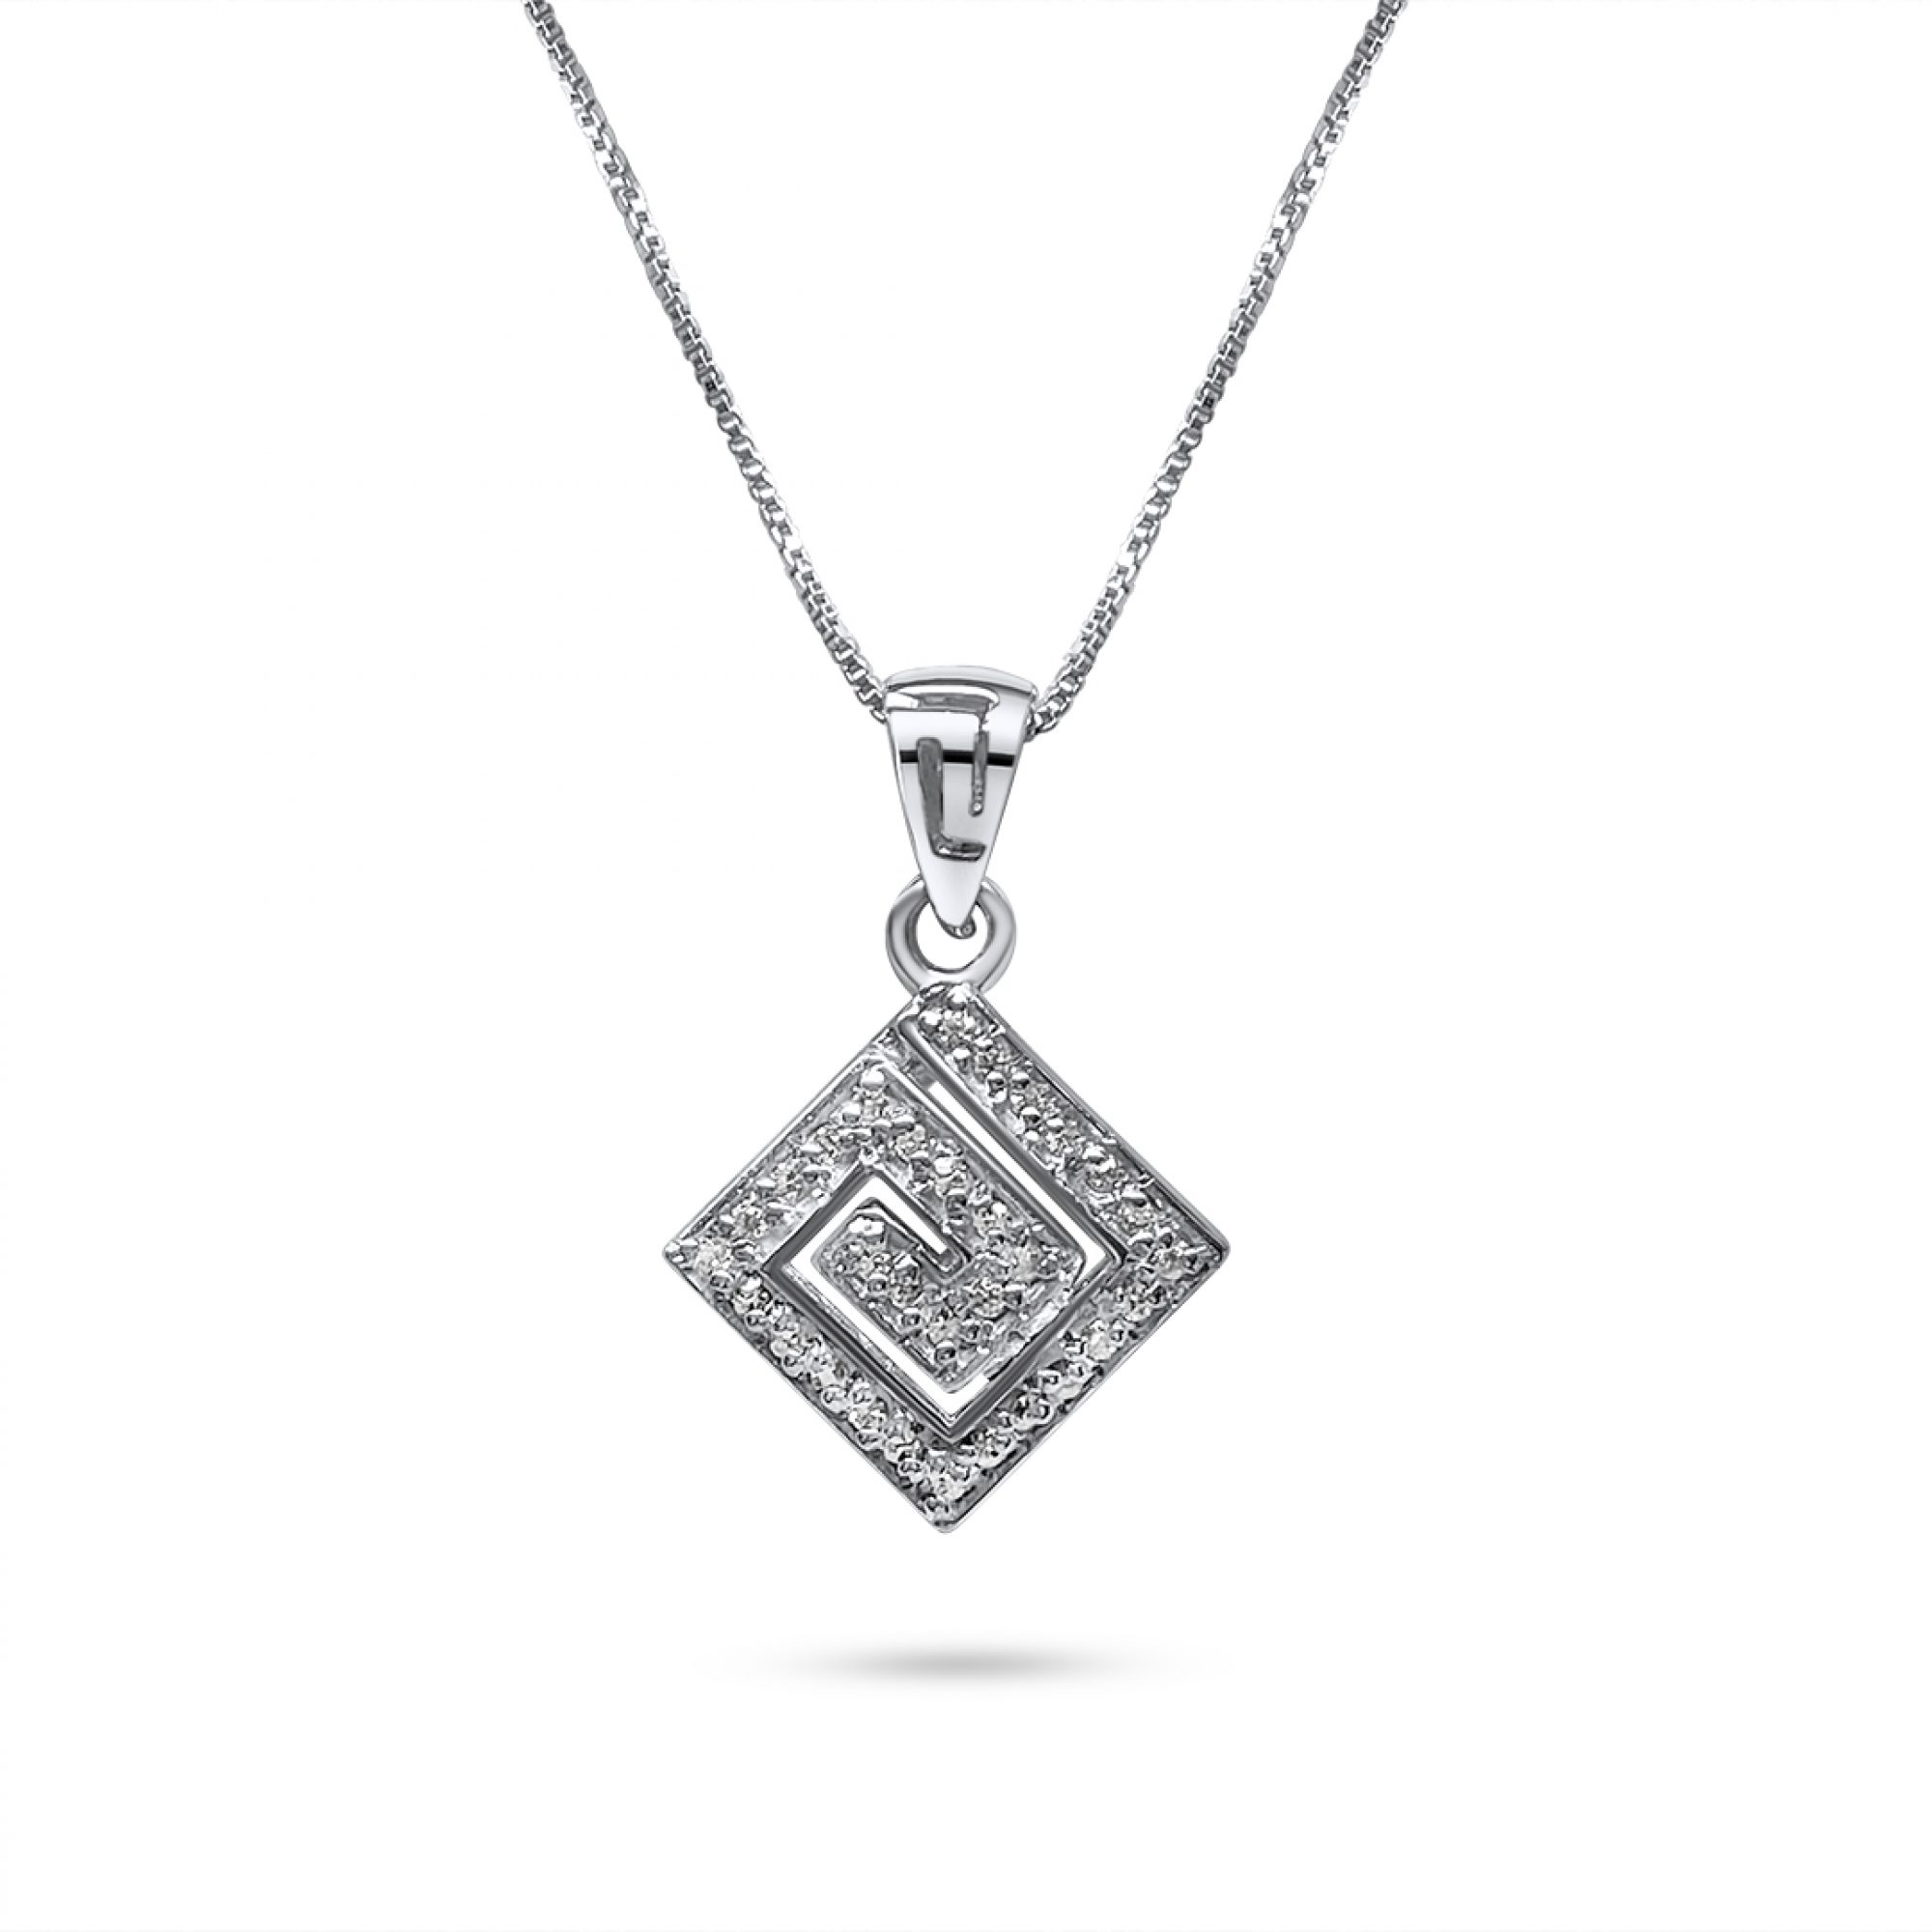 Rhomboid pendant with zircon stones